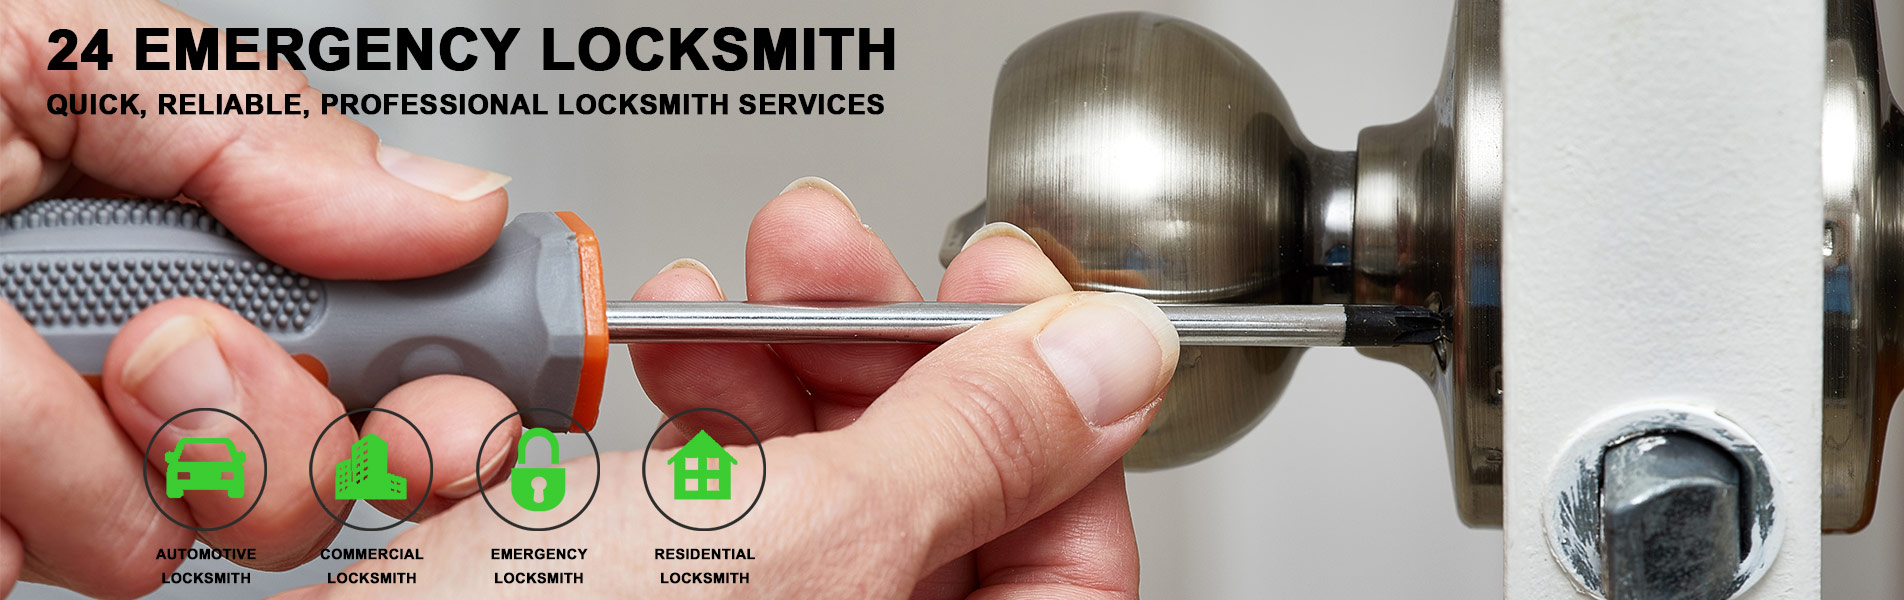 Expert Locksmith Services Miami, FL 305-894-5987